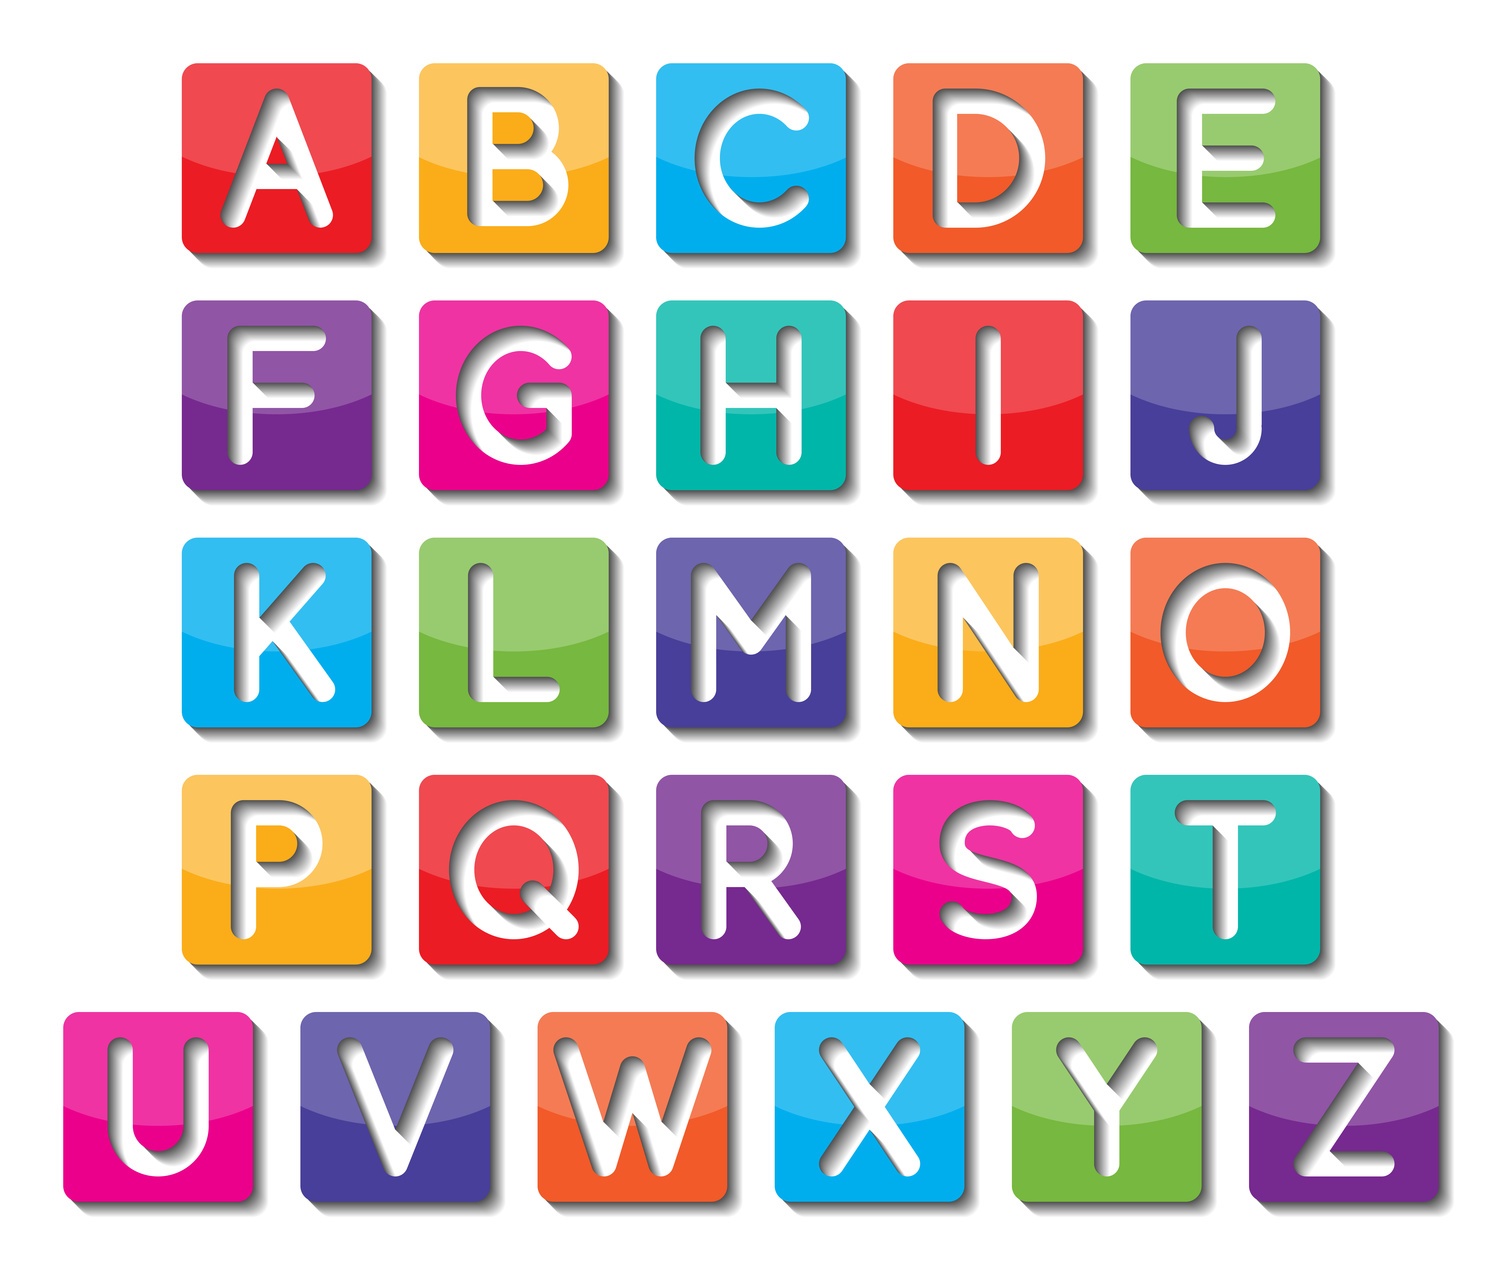 alphabetical-order-1-7k-plays-quizizz